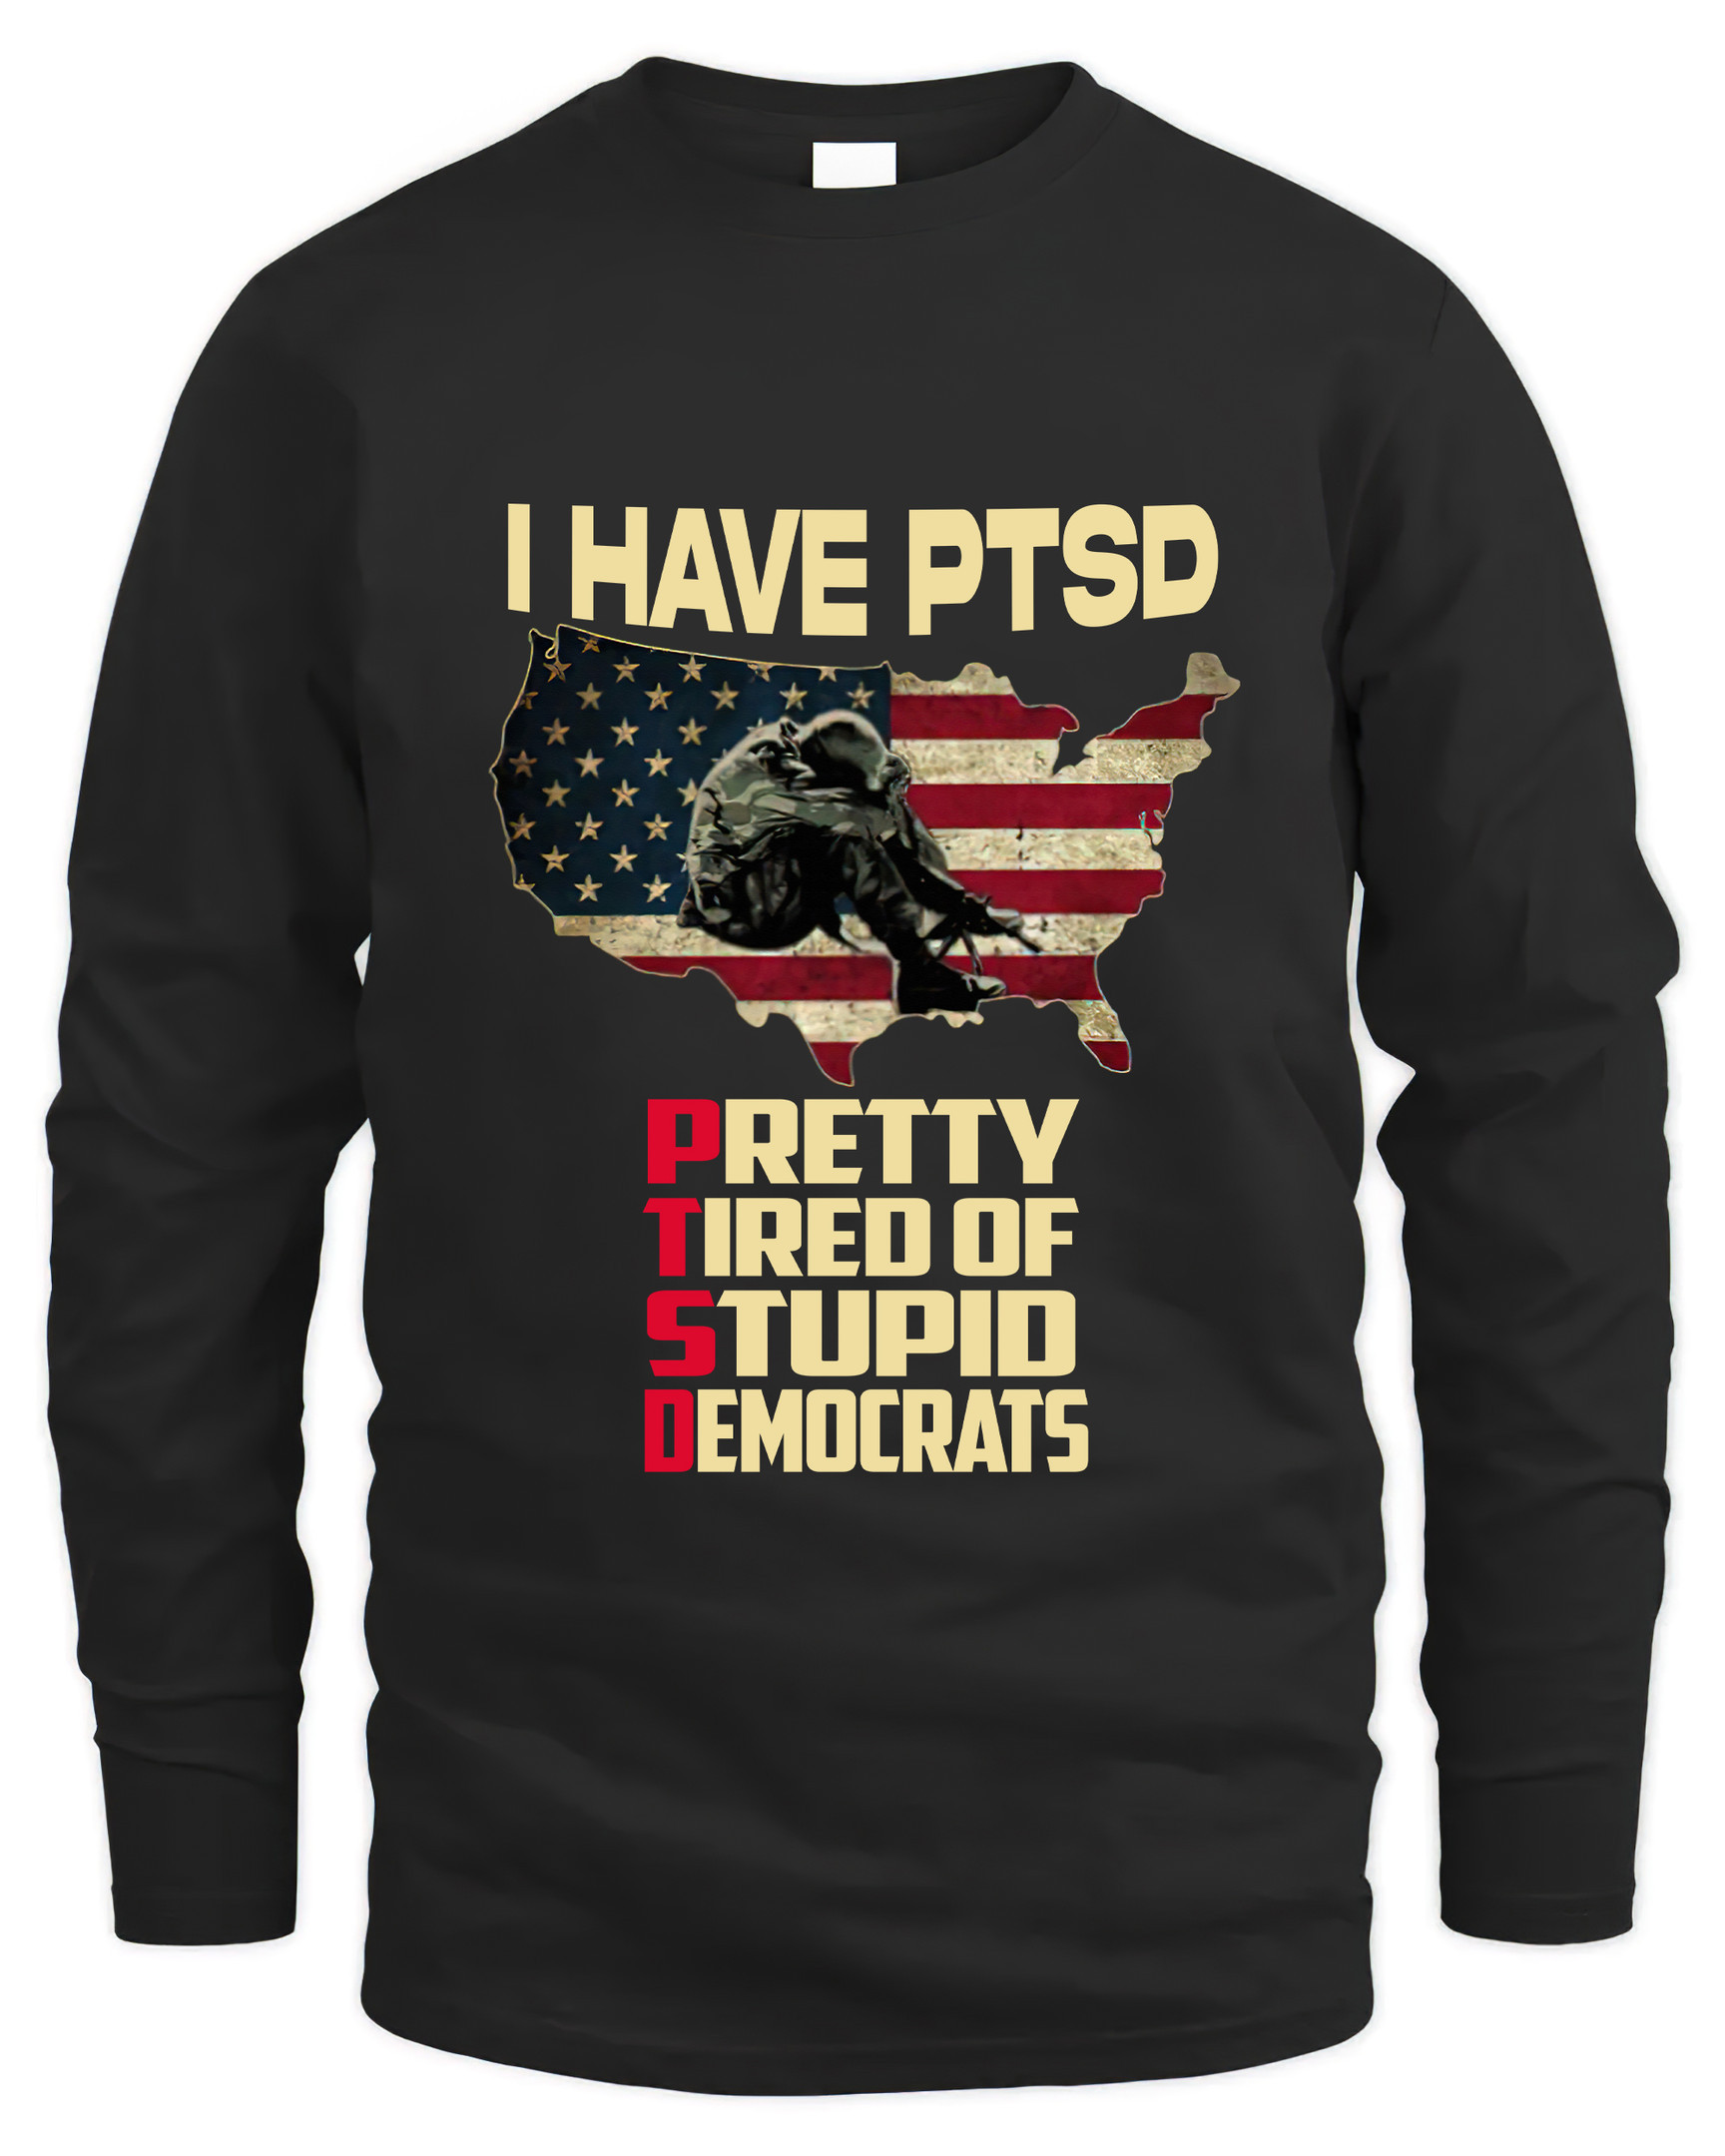 I Have PTSD Pretty Tired Of Stupid Democrats, 2D Tshirt